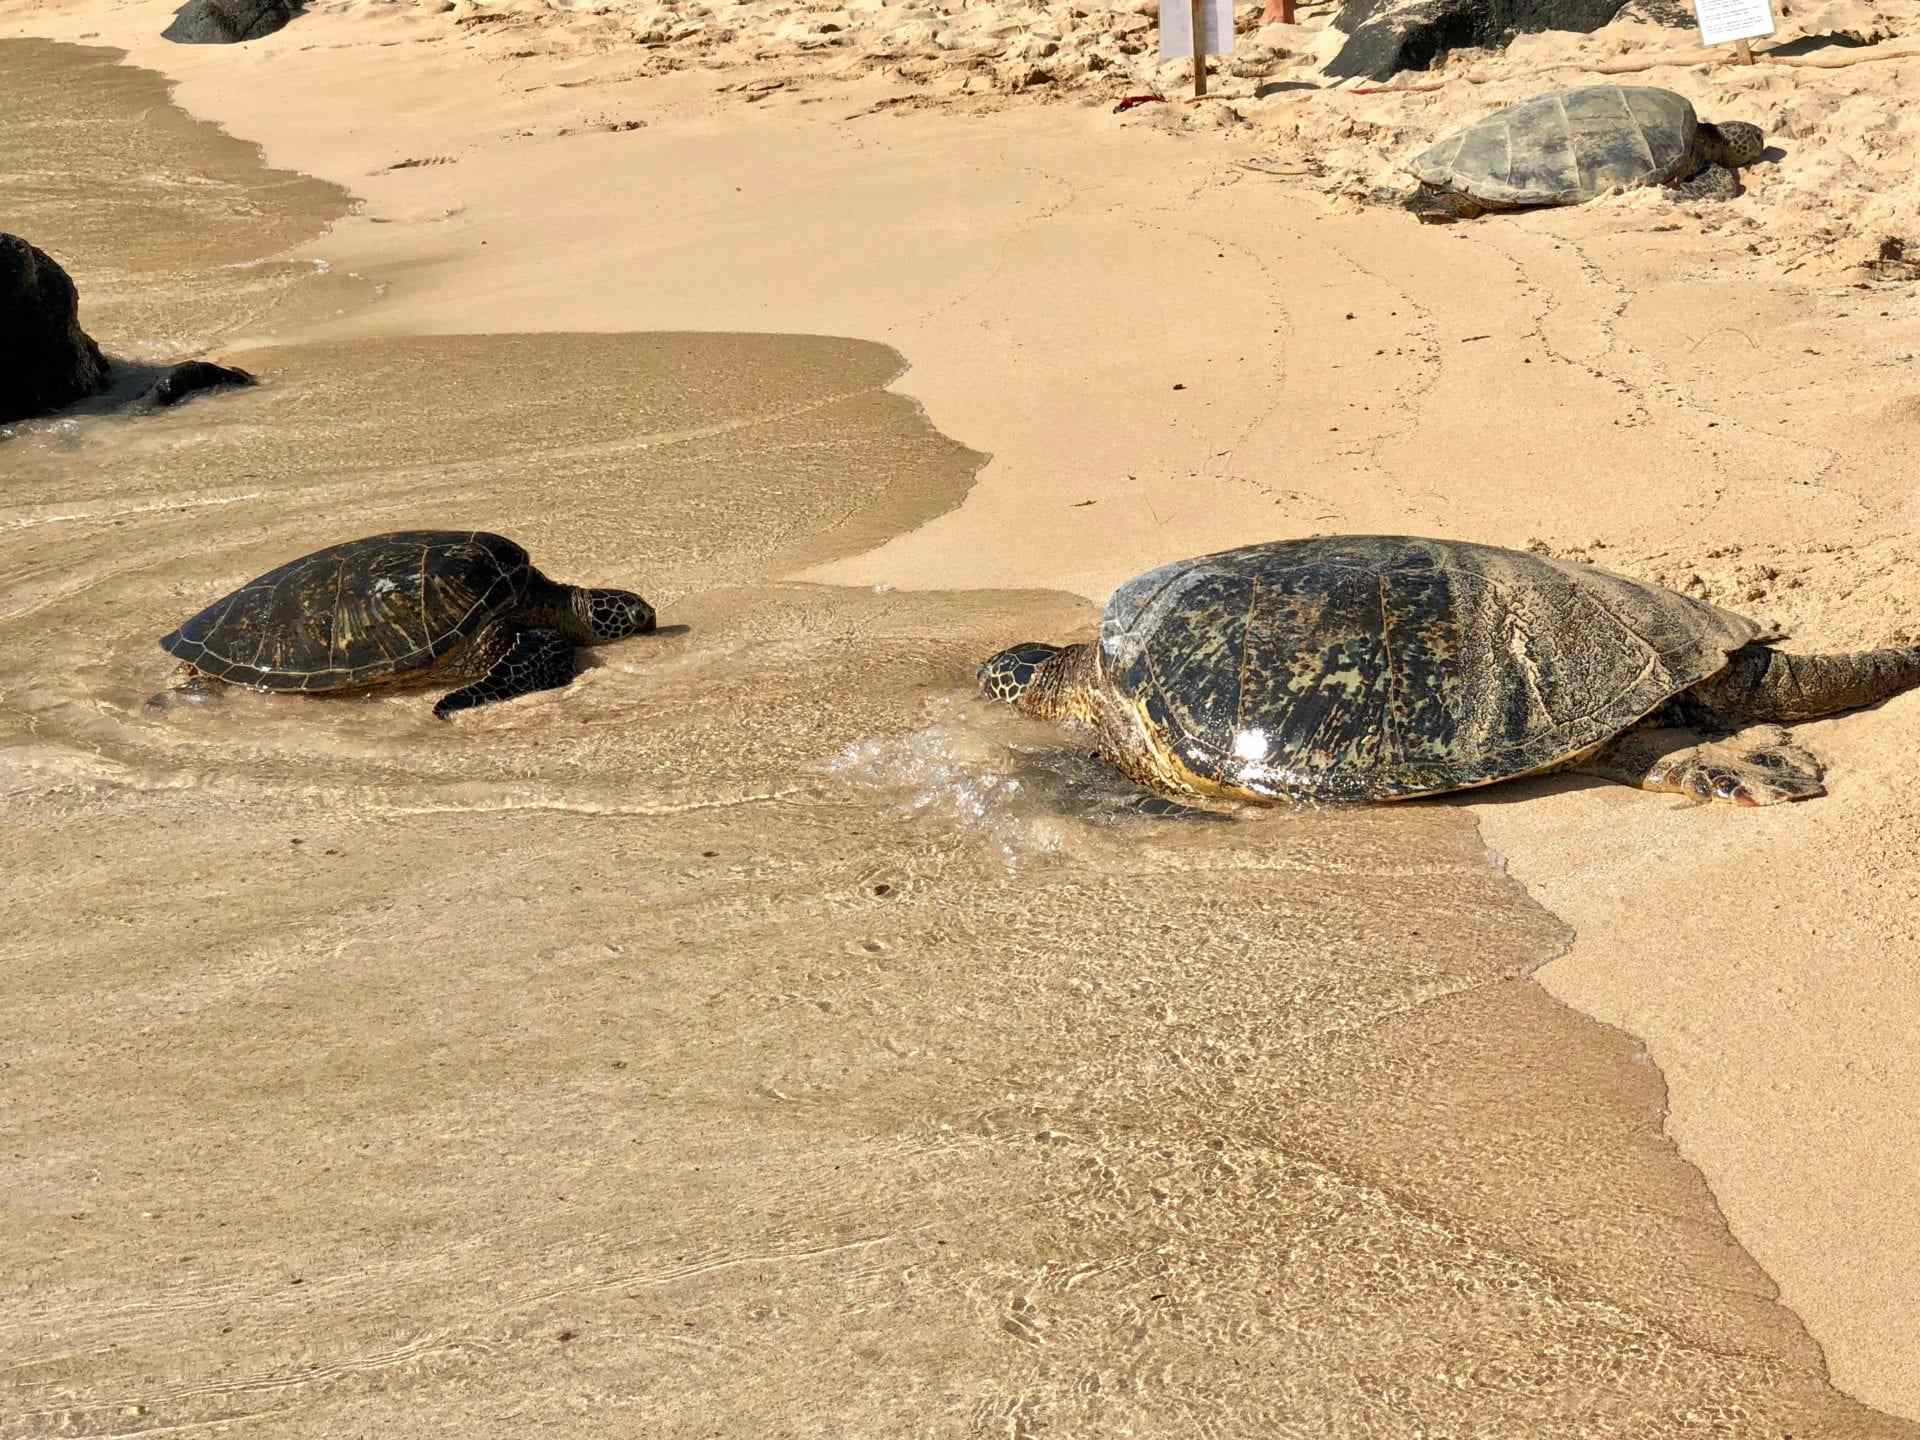 three turtles on the beach